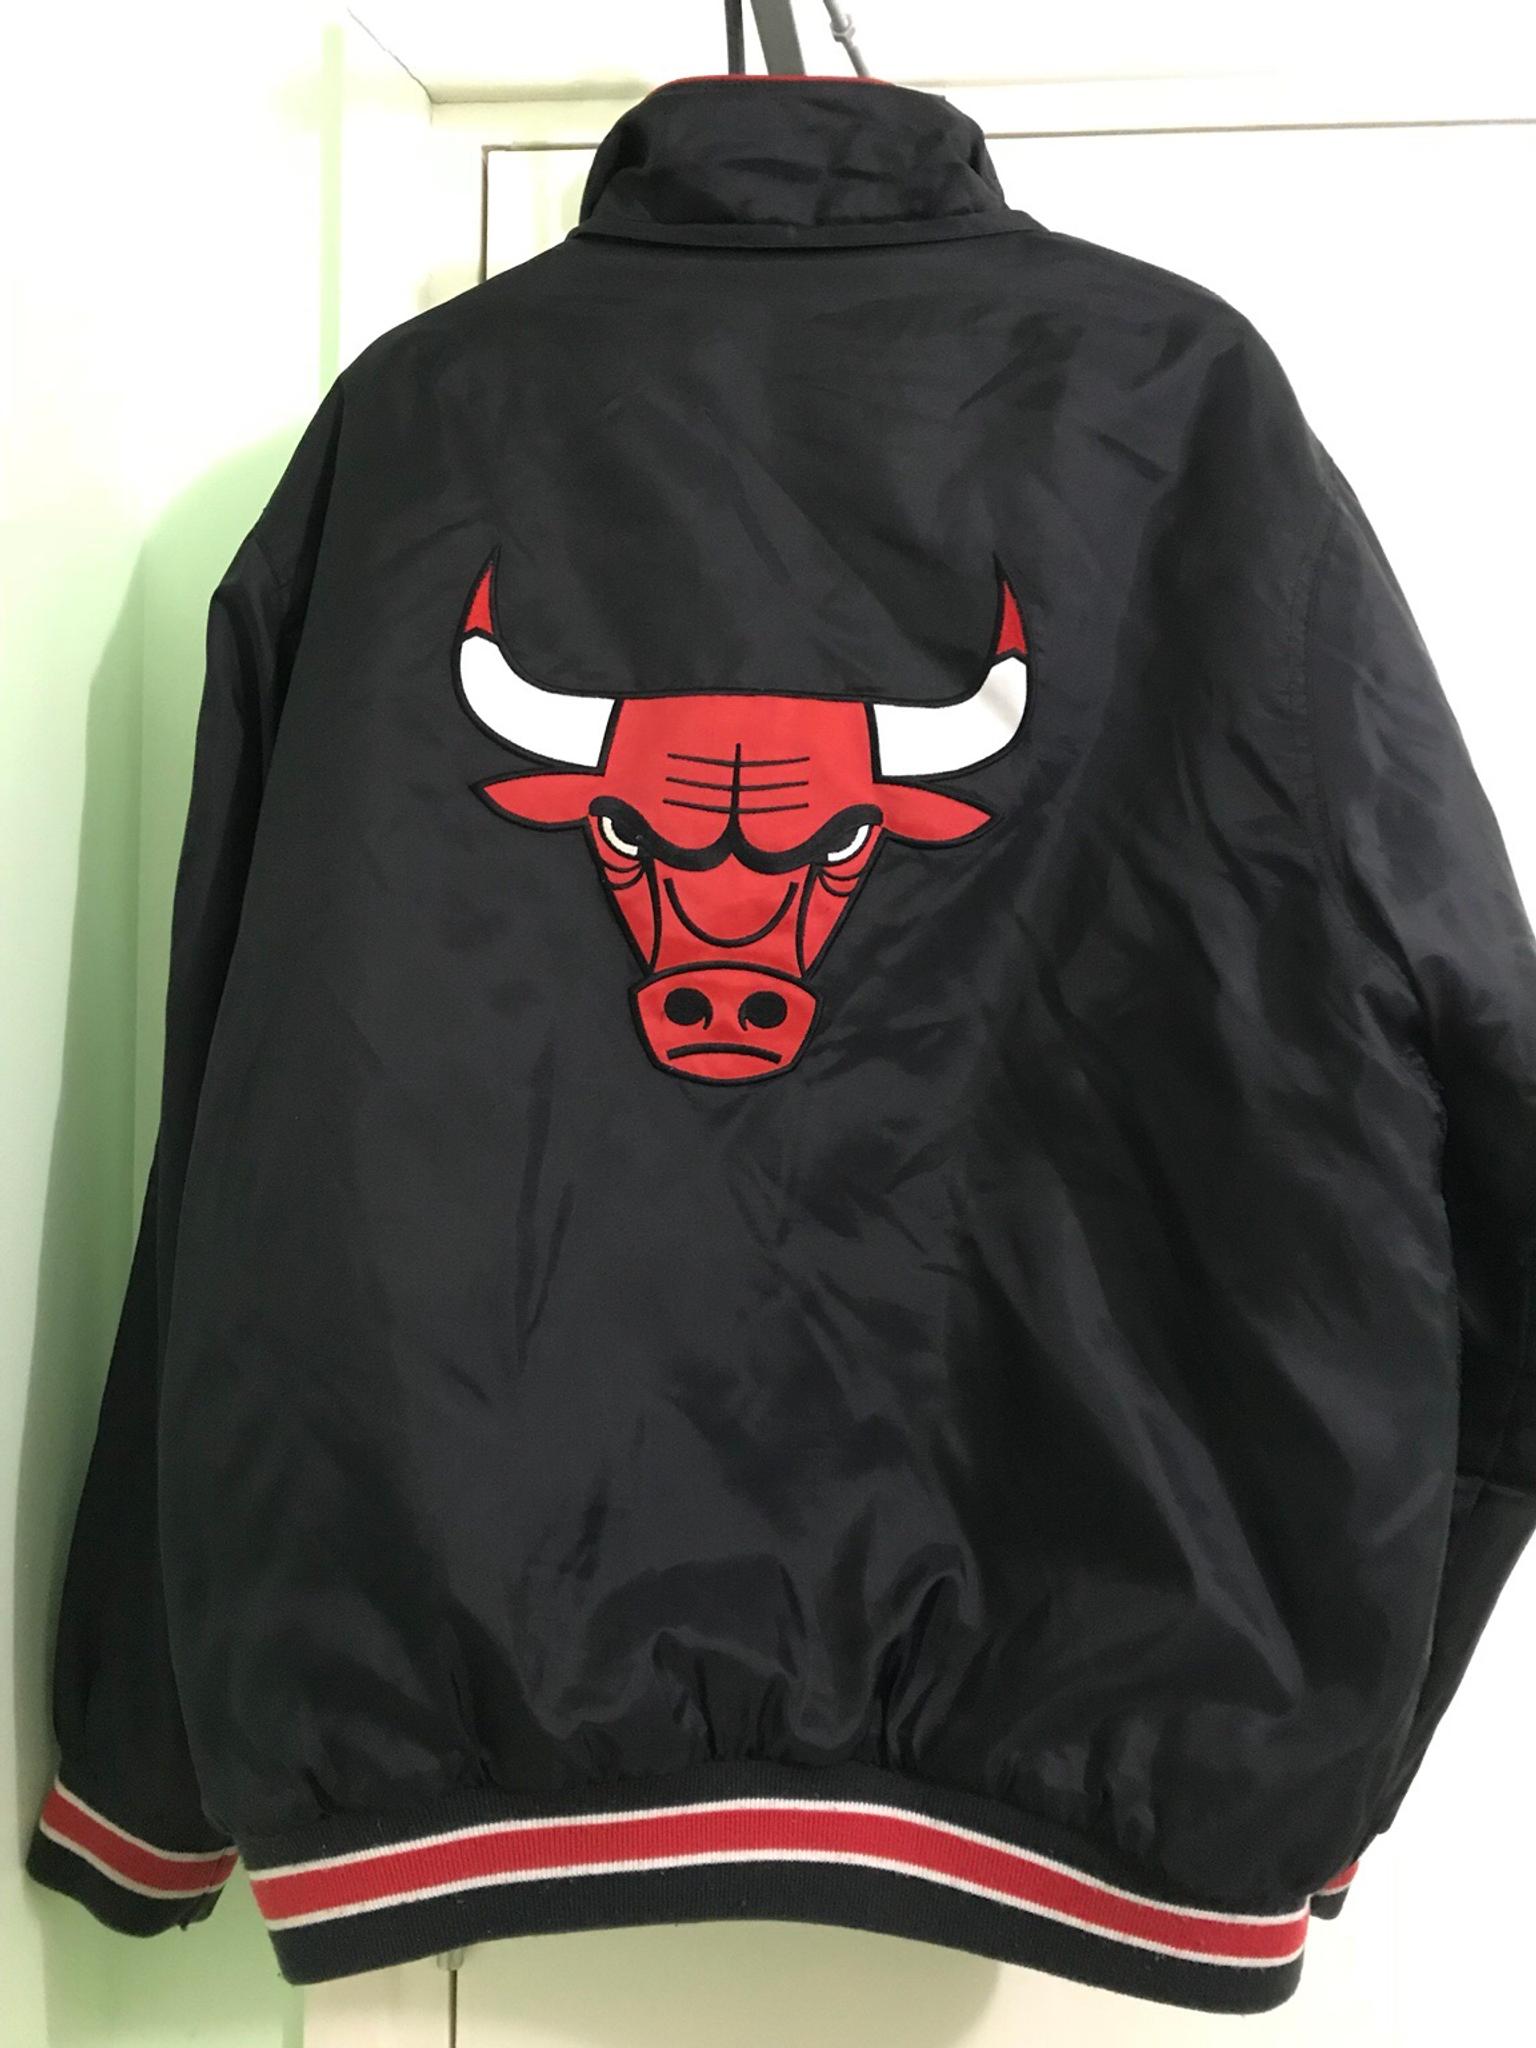 bulls championship jacket